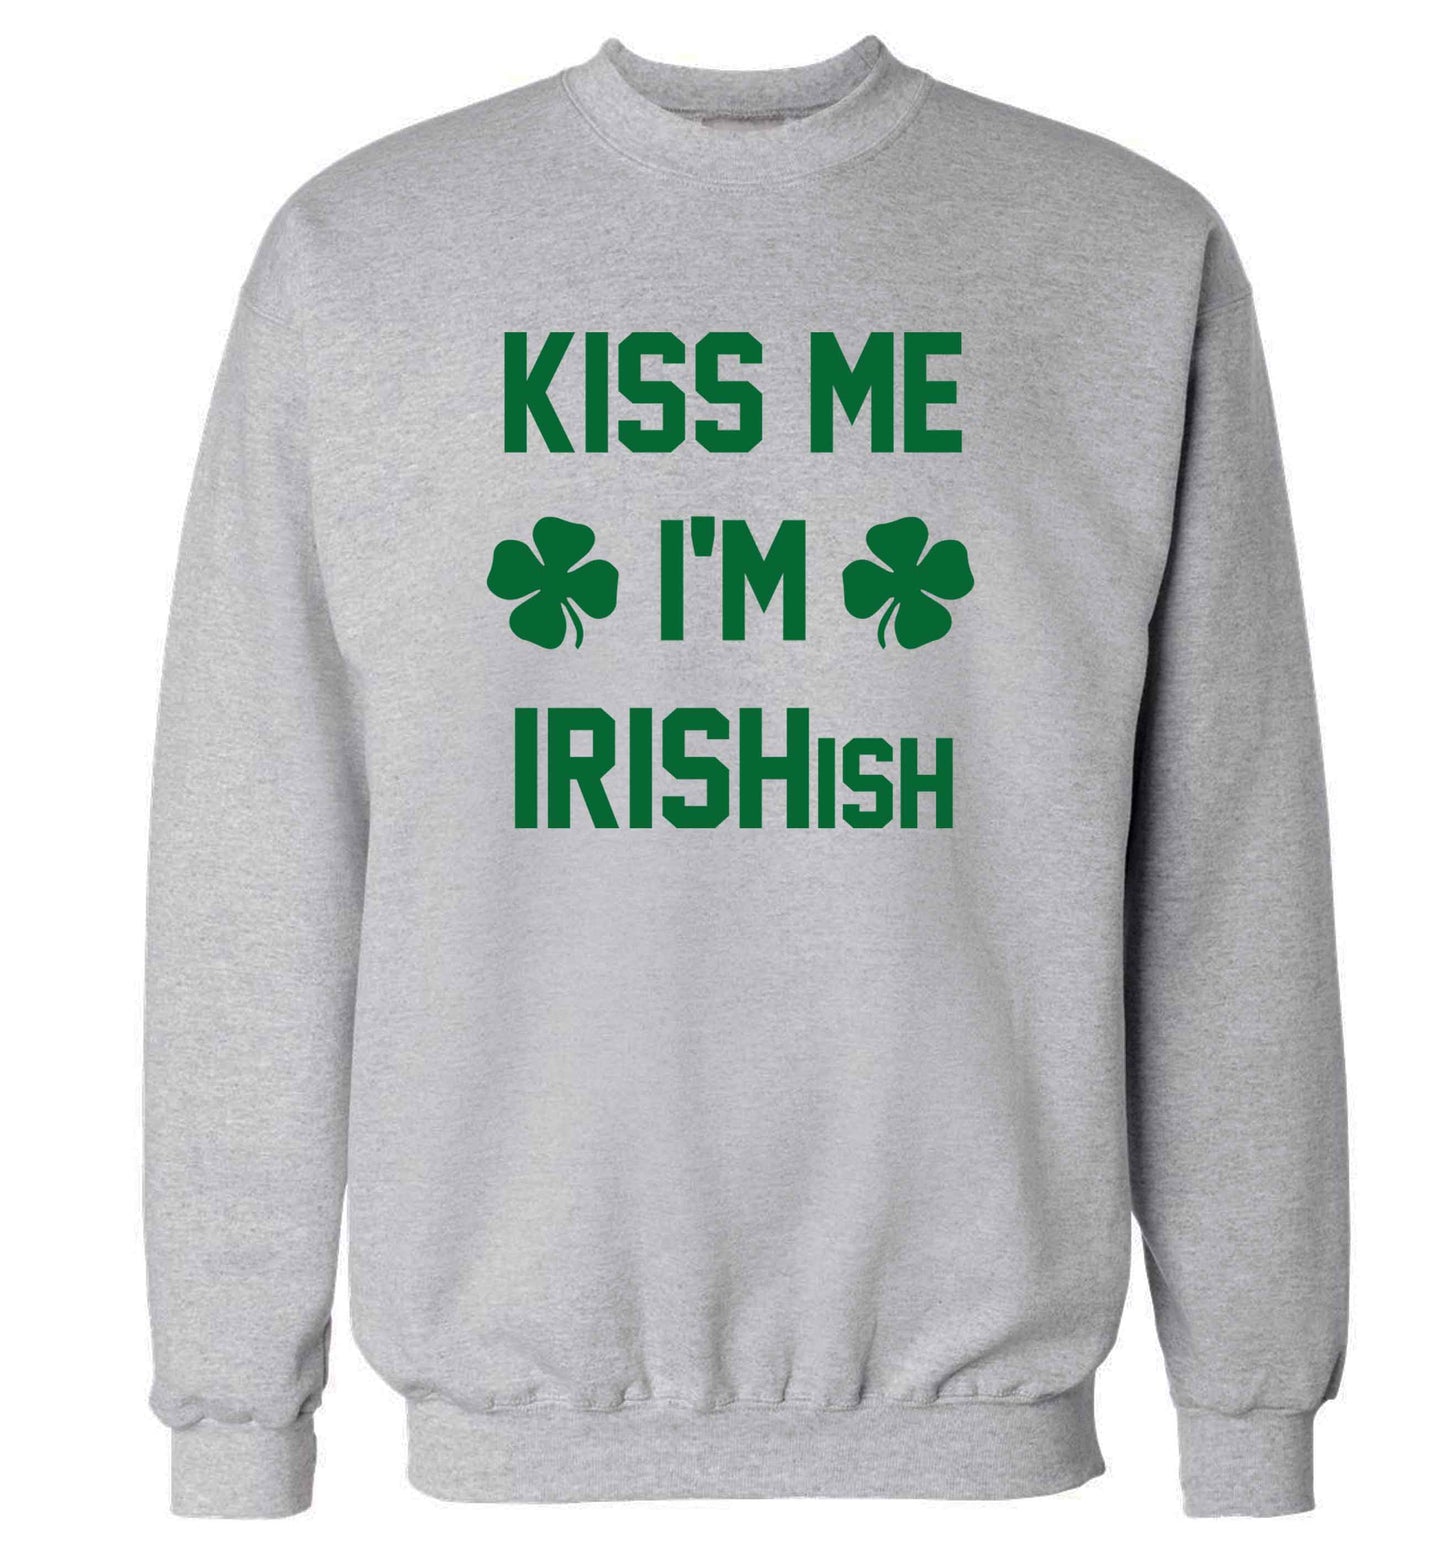 Kiss me I'm Irishish adult's unisex grey sweater 2XL